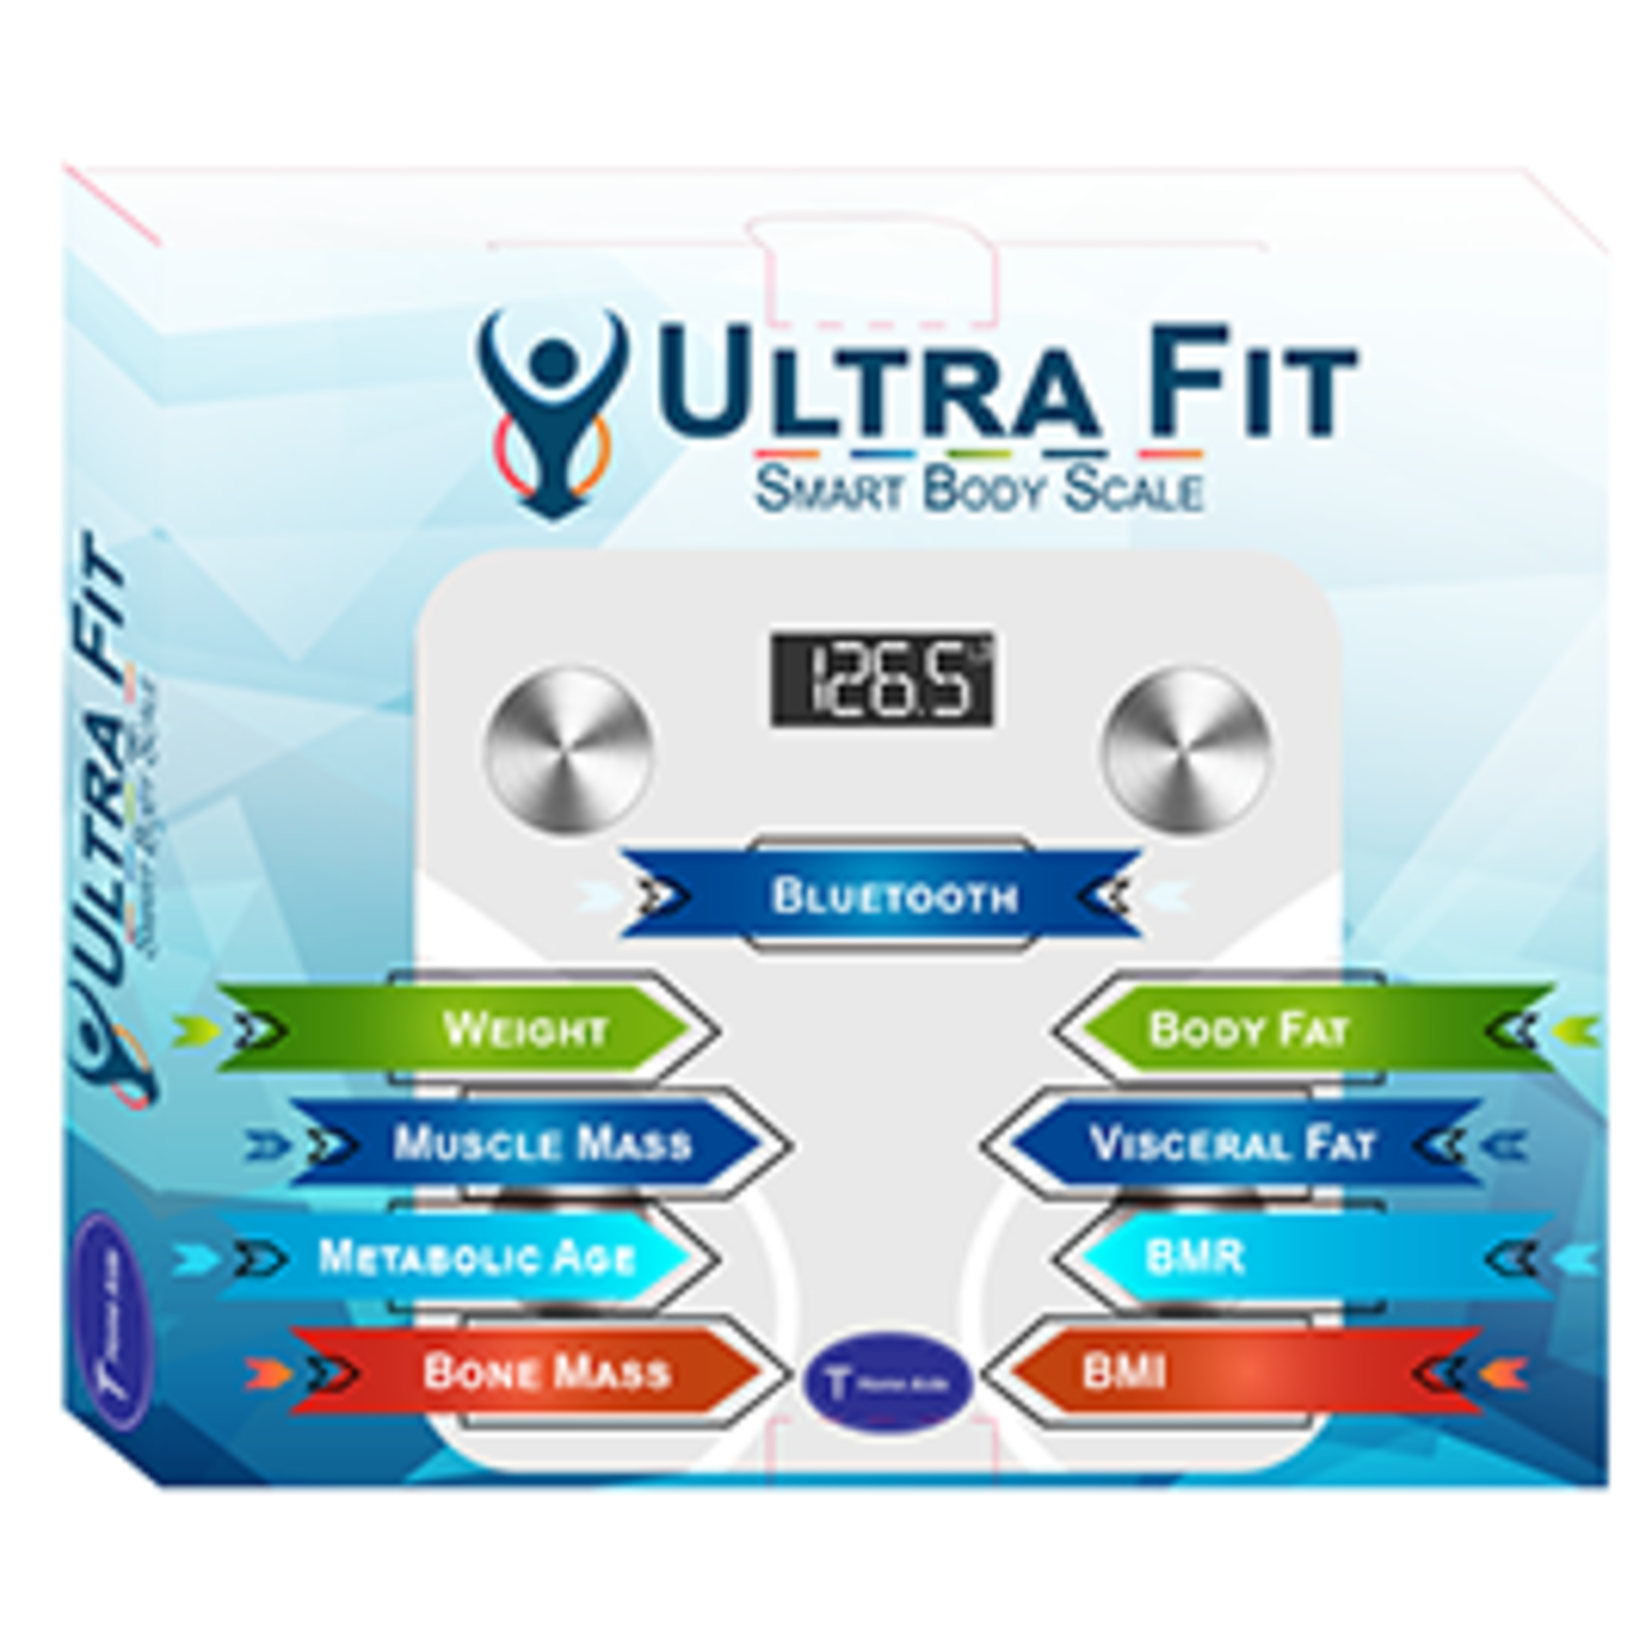 Ultra Fit Smart Body Scale - NDC # 50027-0494-32